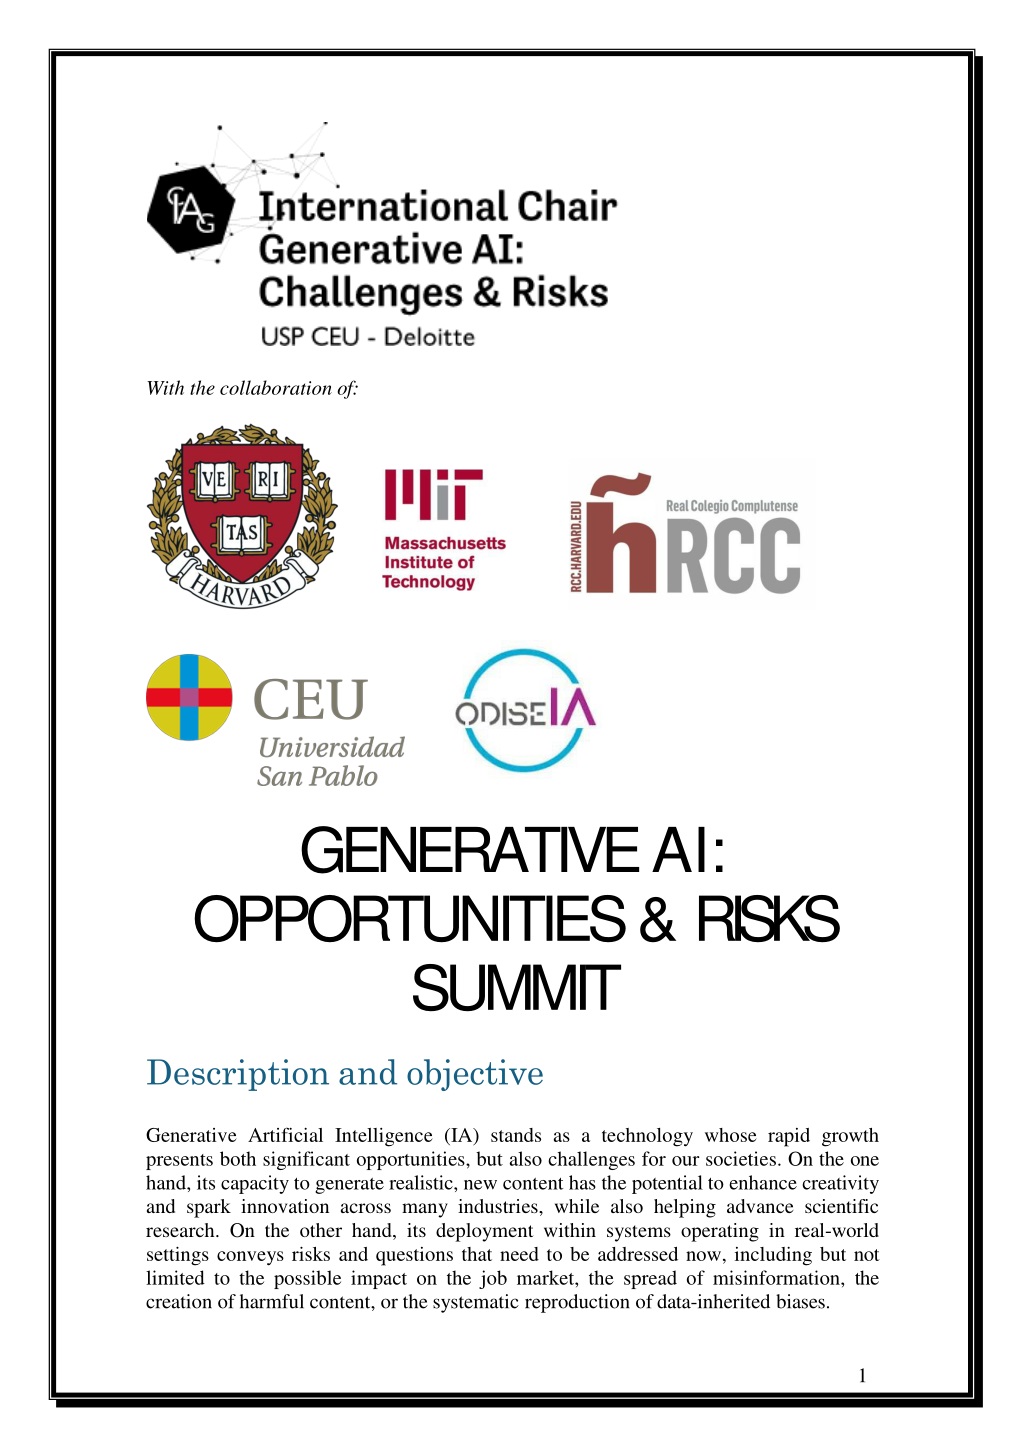 Generative AI Opportunities & Risks Summit